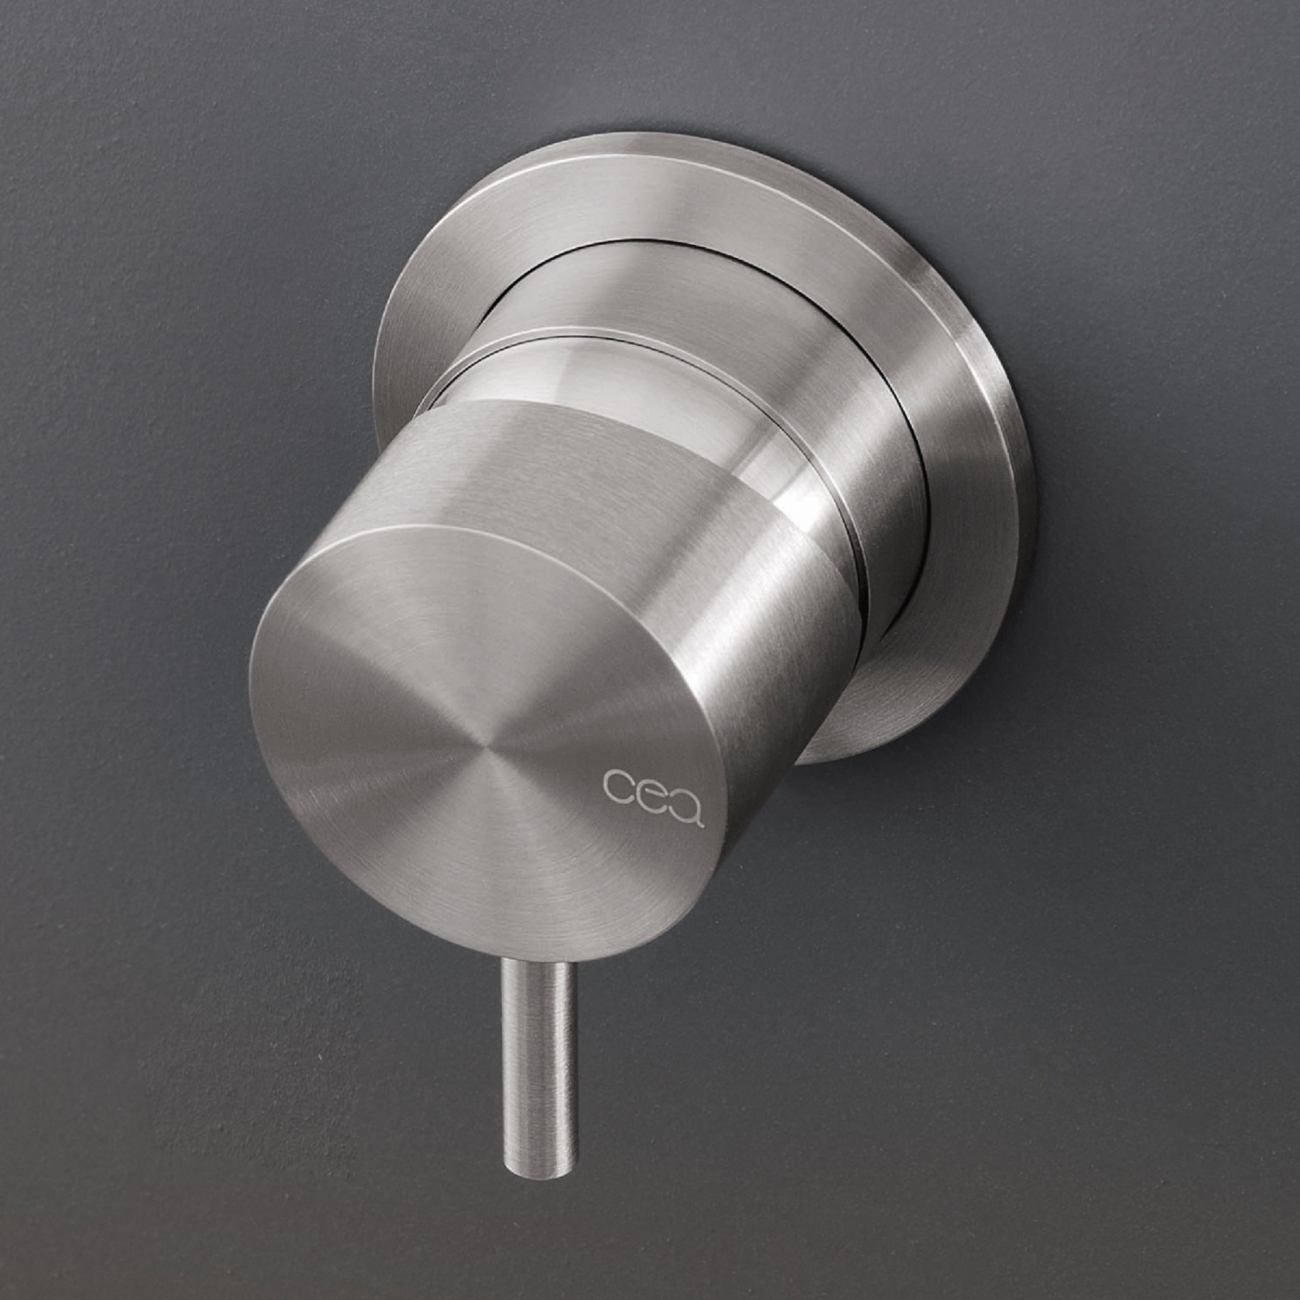 Ceadesign MILO360 Wall mounted single handle mixer